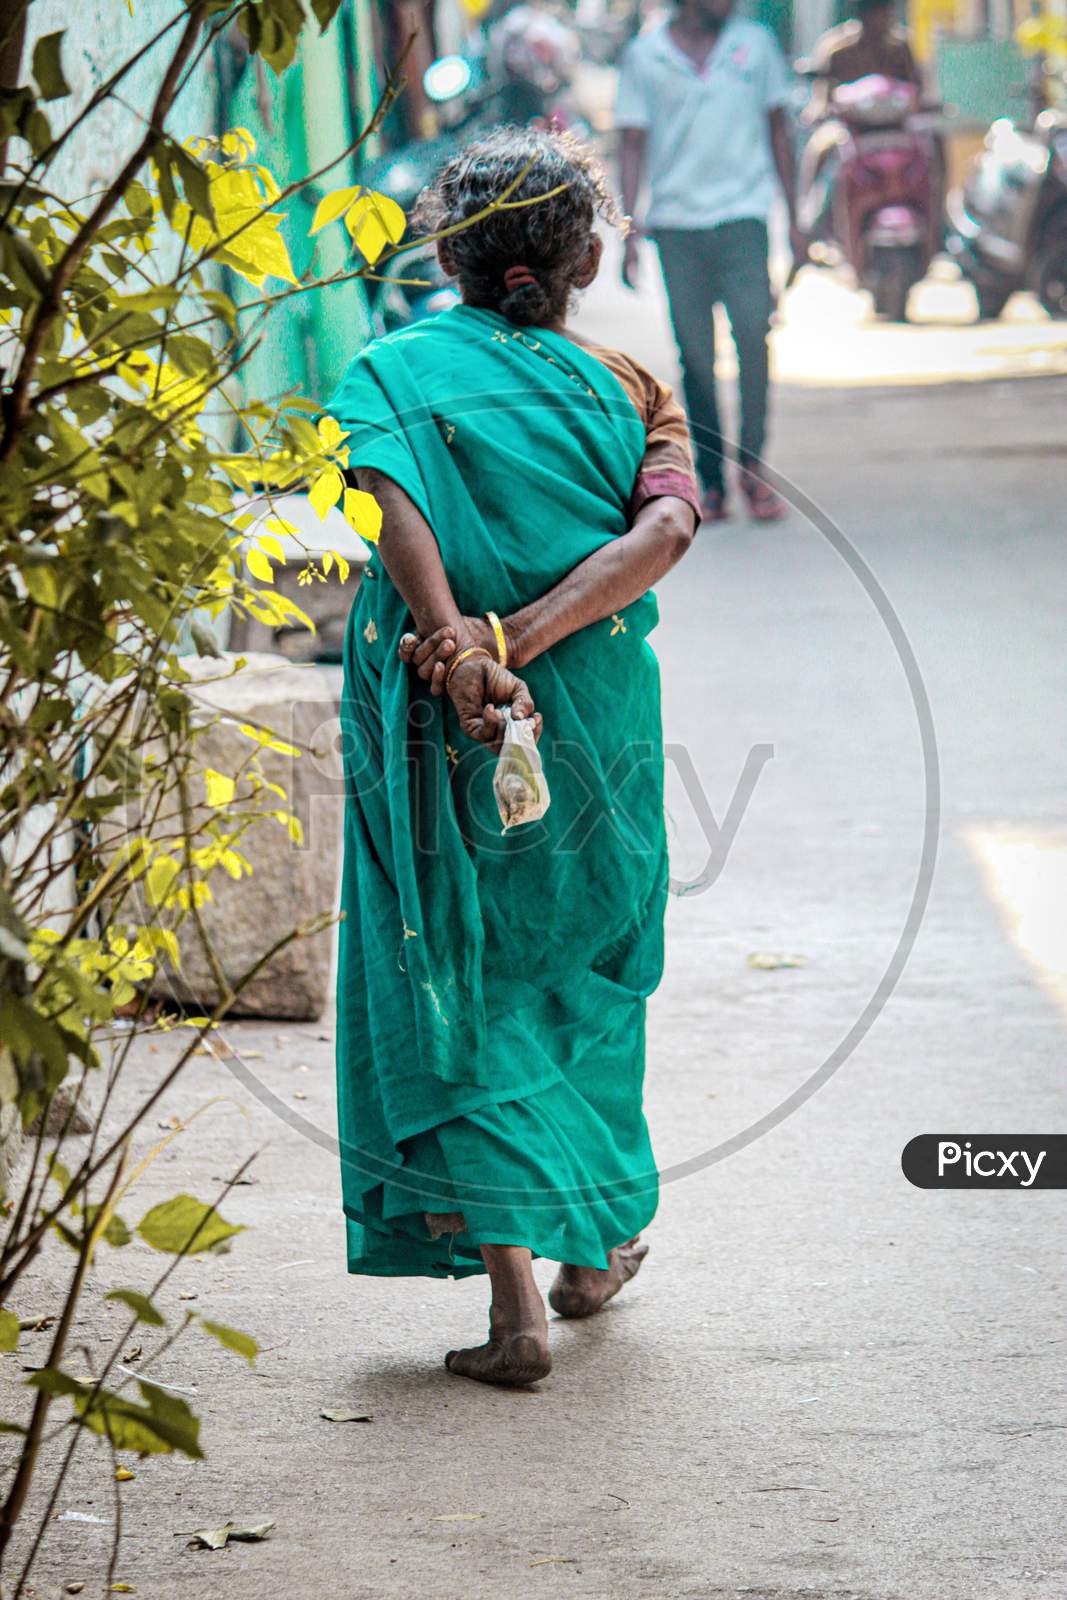 An Elderly Woman Walking on The Streets